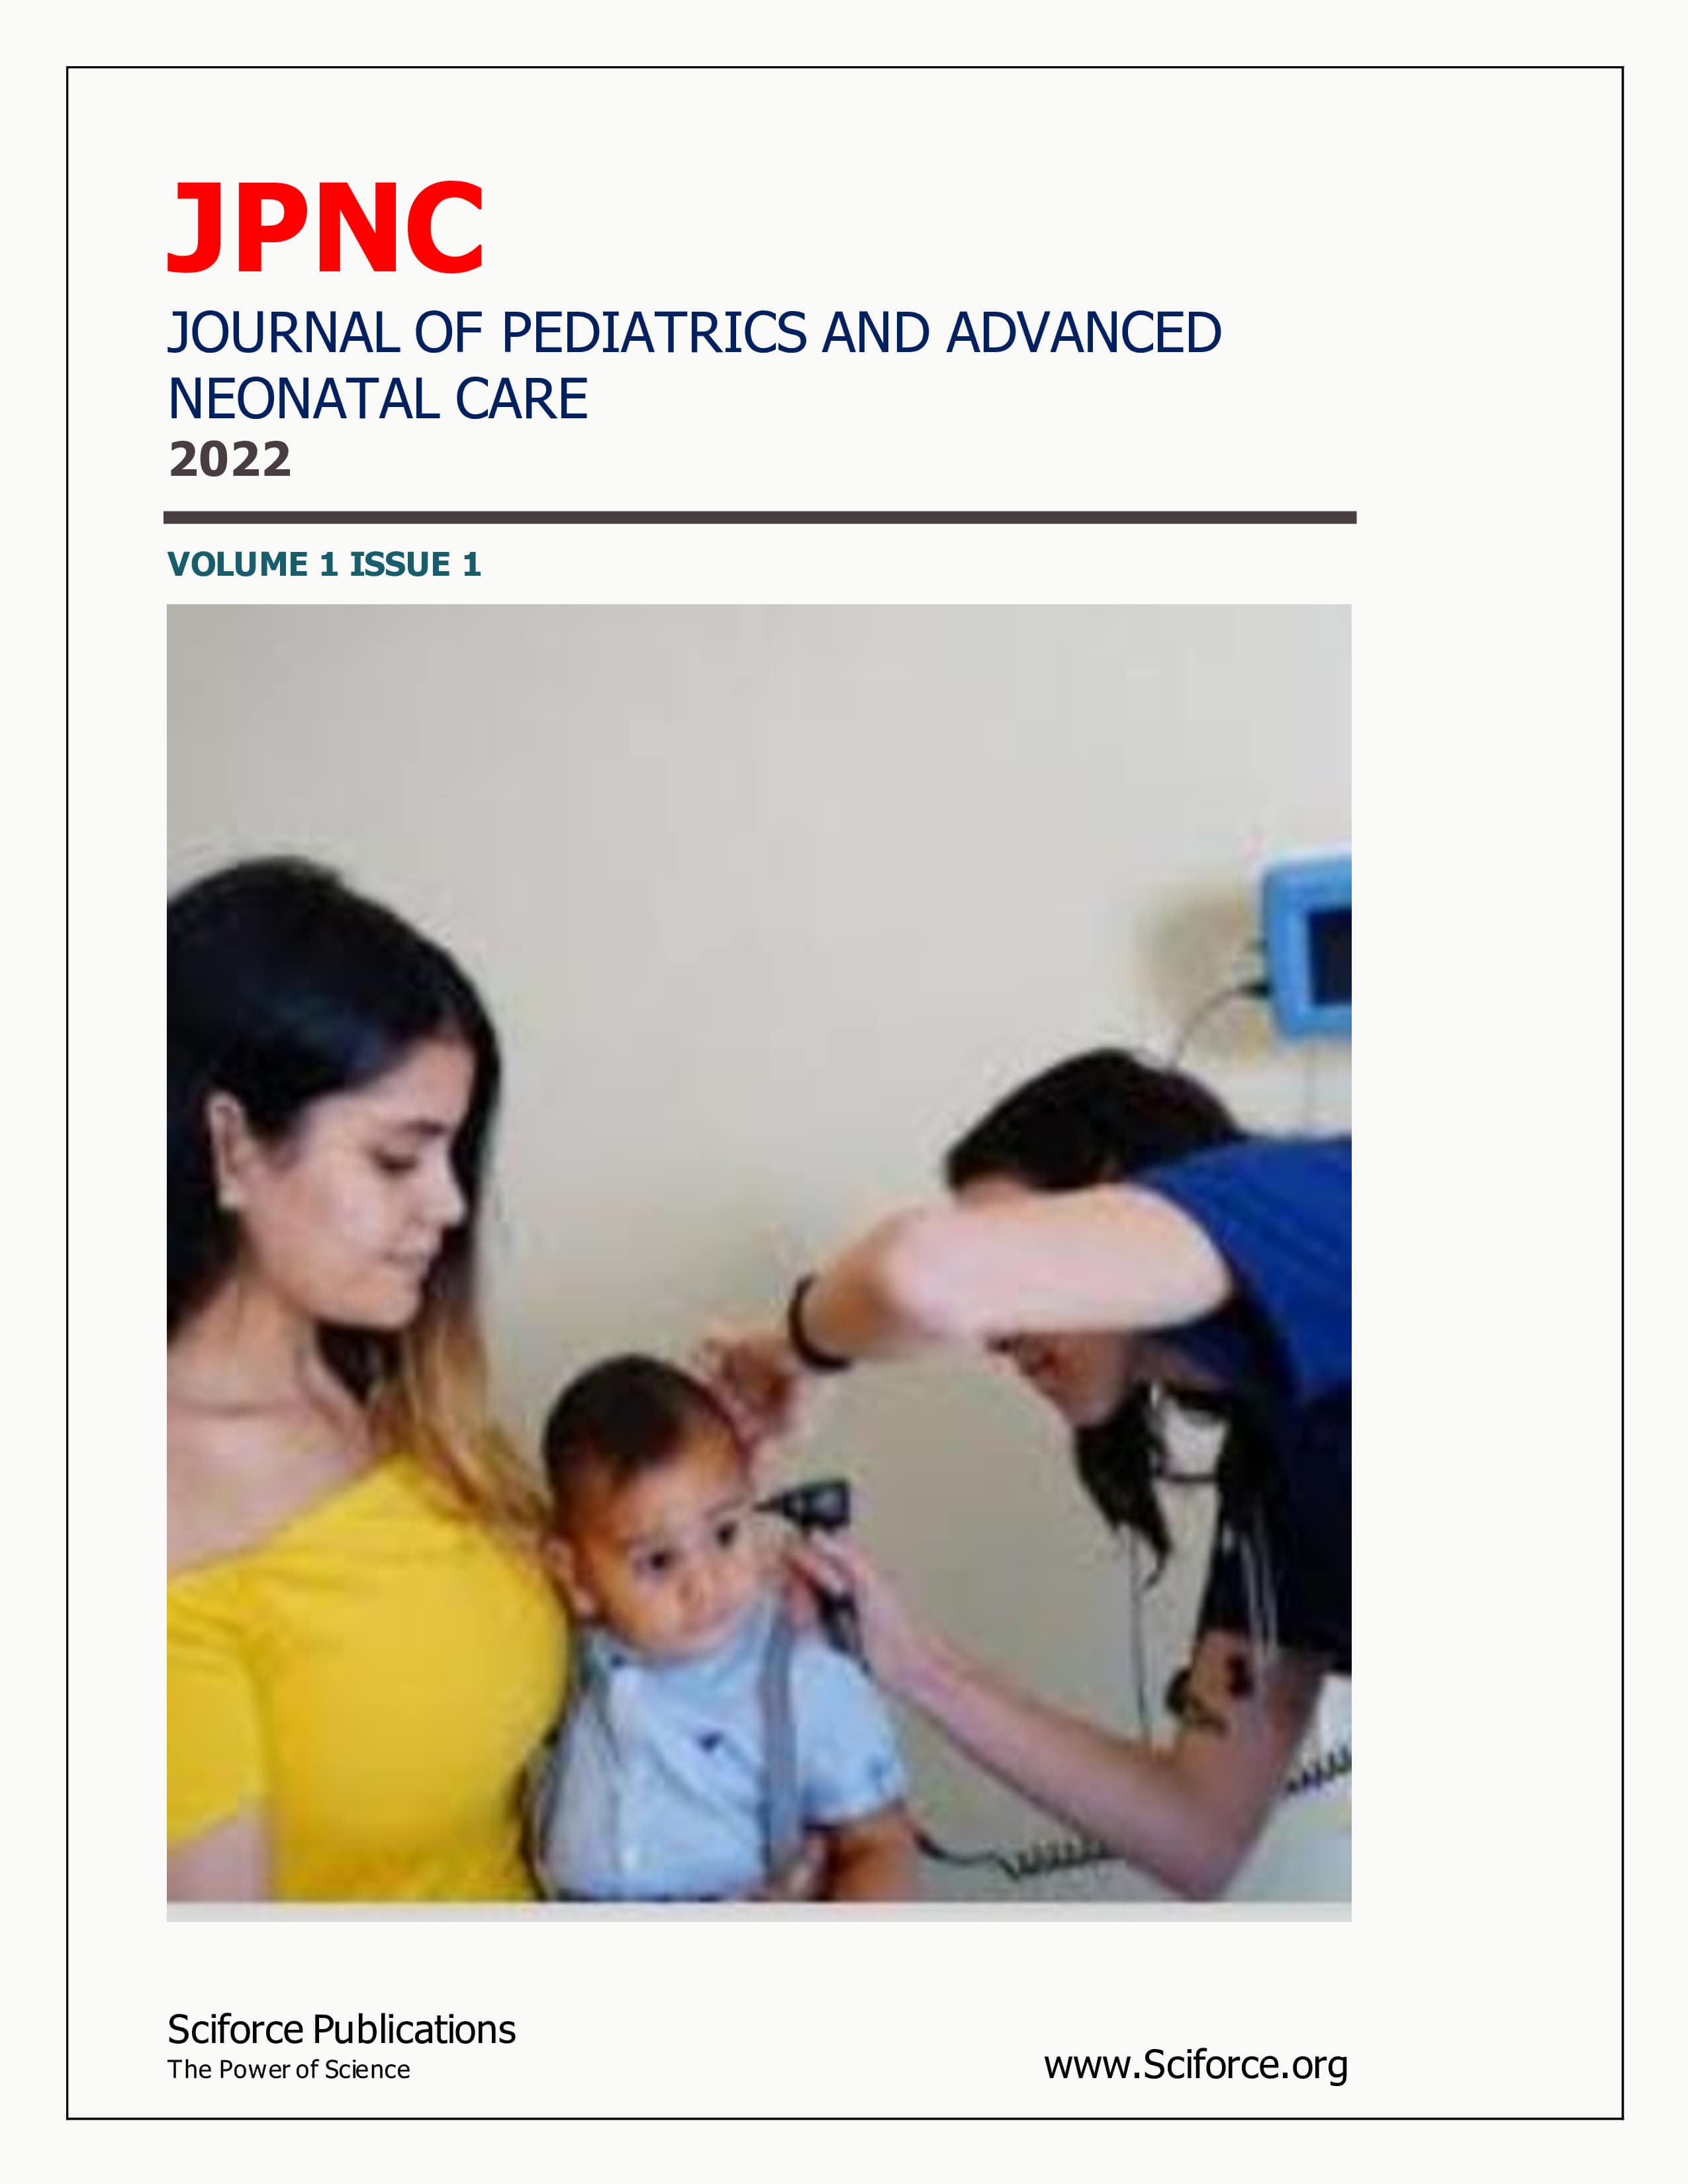 Journal of Pediatrics and Advanced Neonatal Care